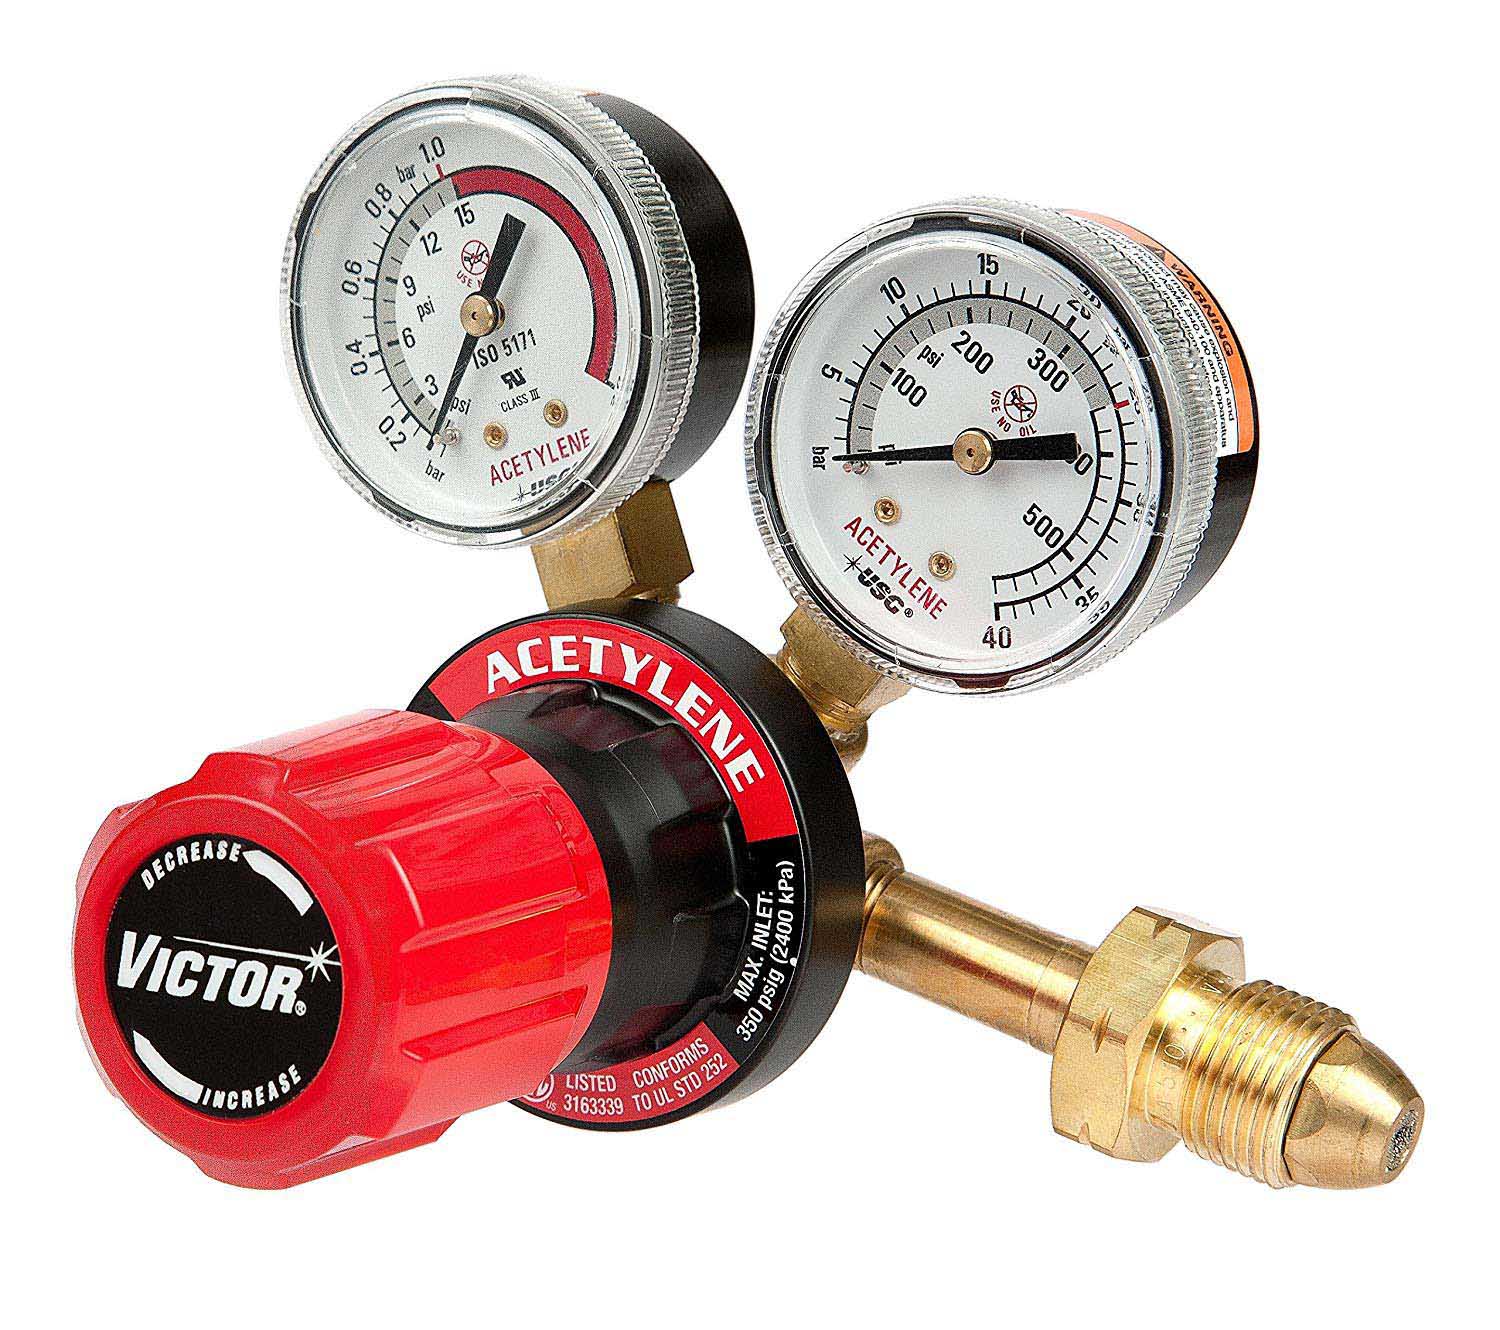 Victor G250-15-992 oxygen regulator